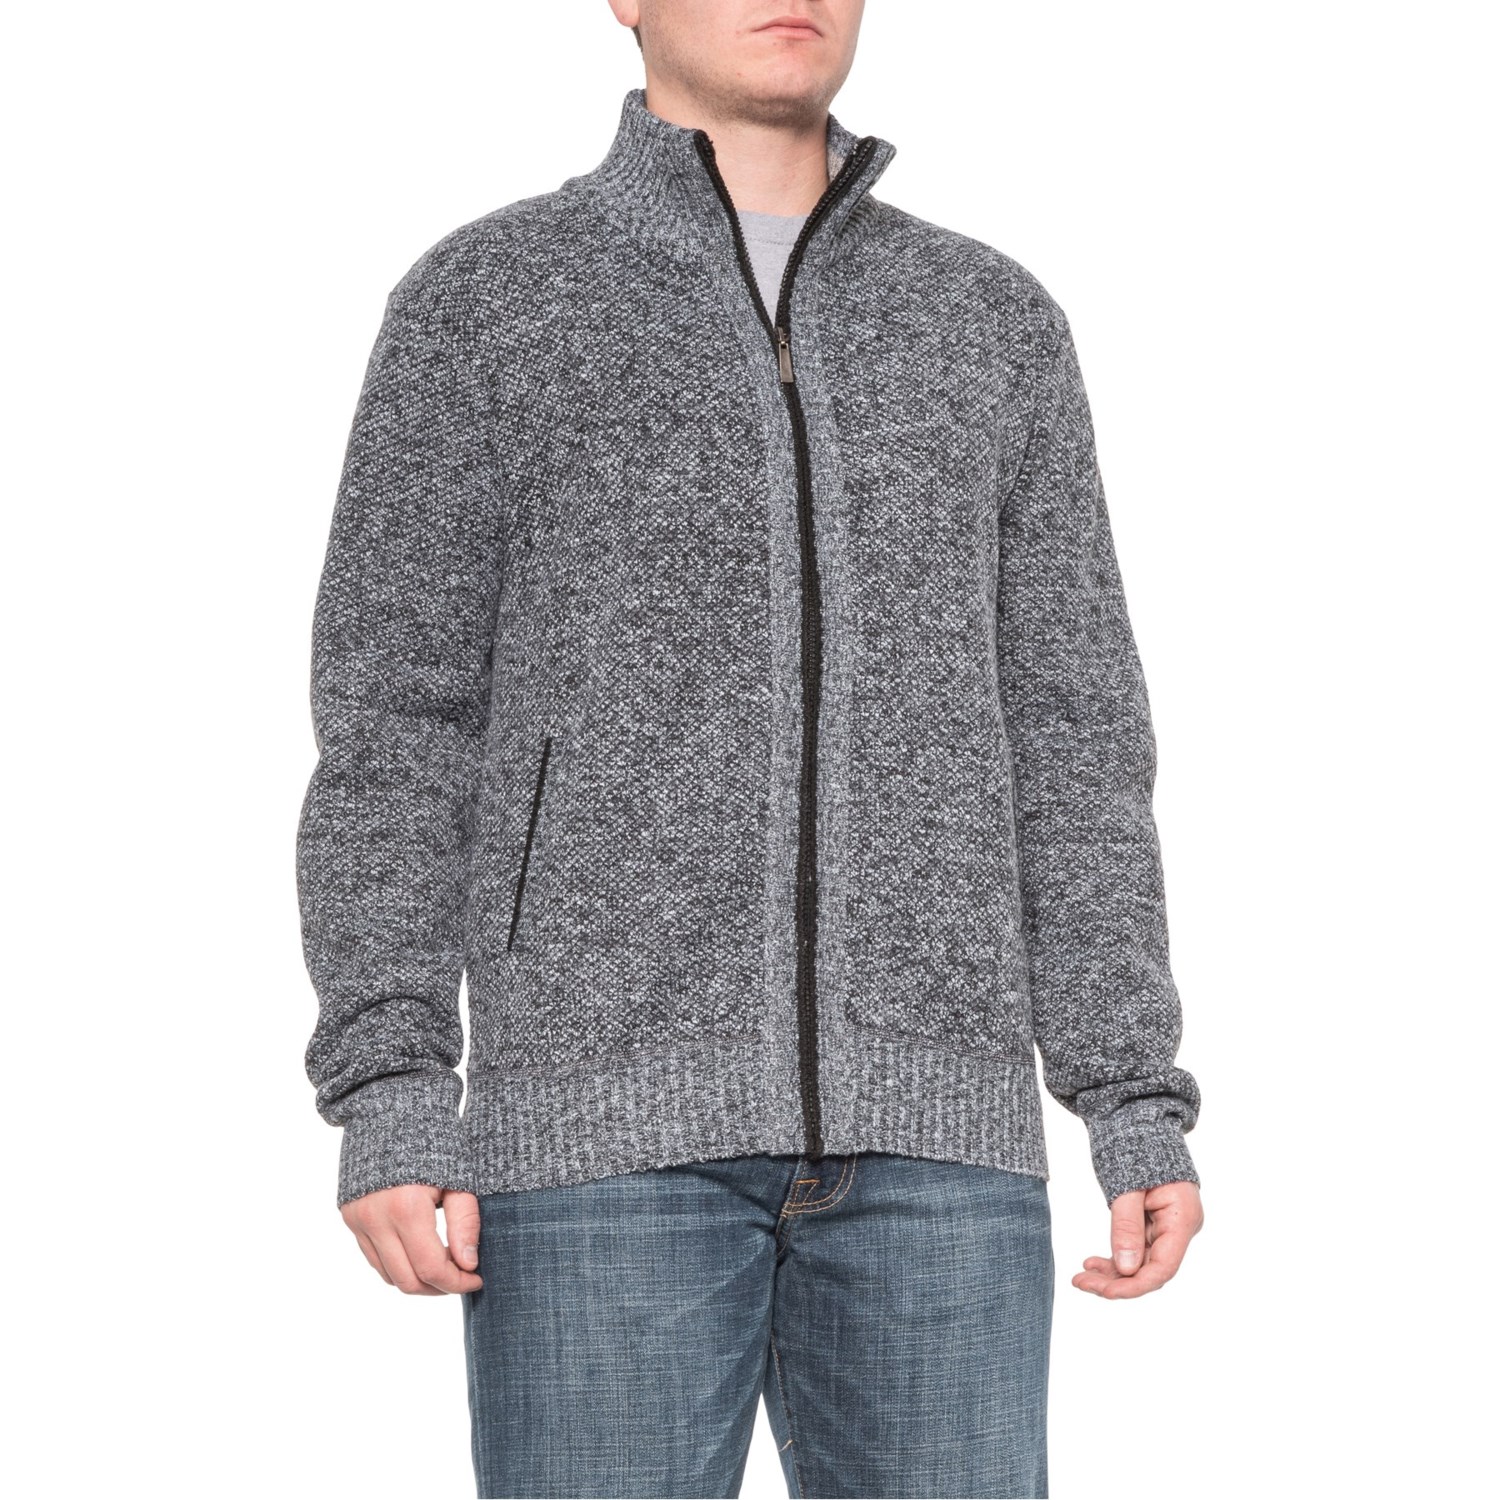 Pacific Teaze Bonded Soft Fleece Sweater (For Men) - Save 70%